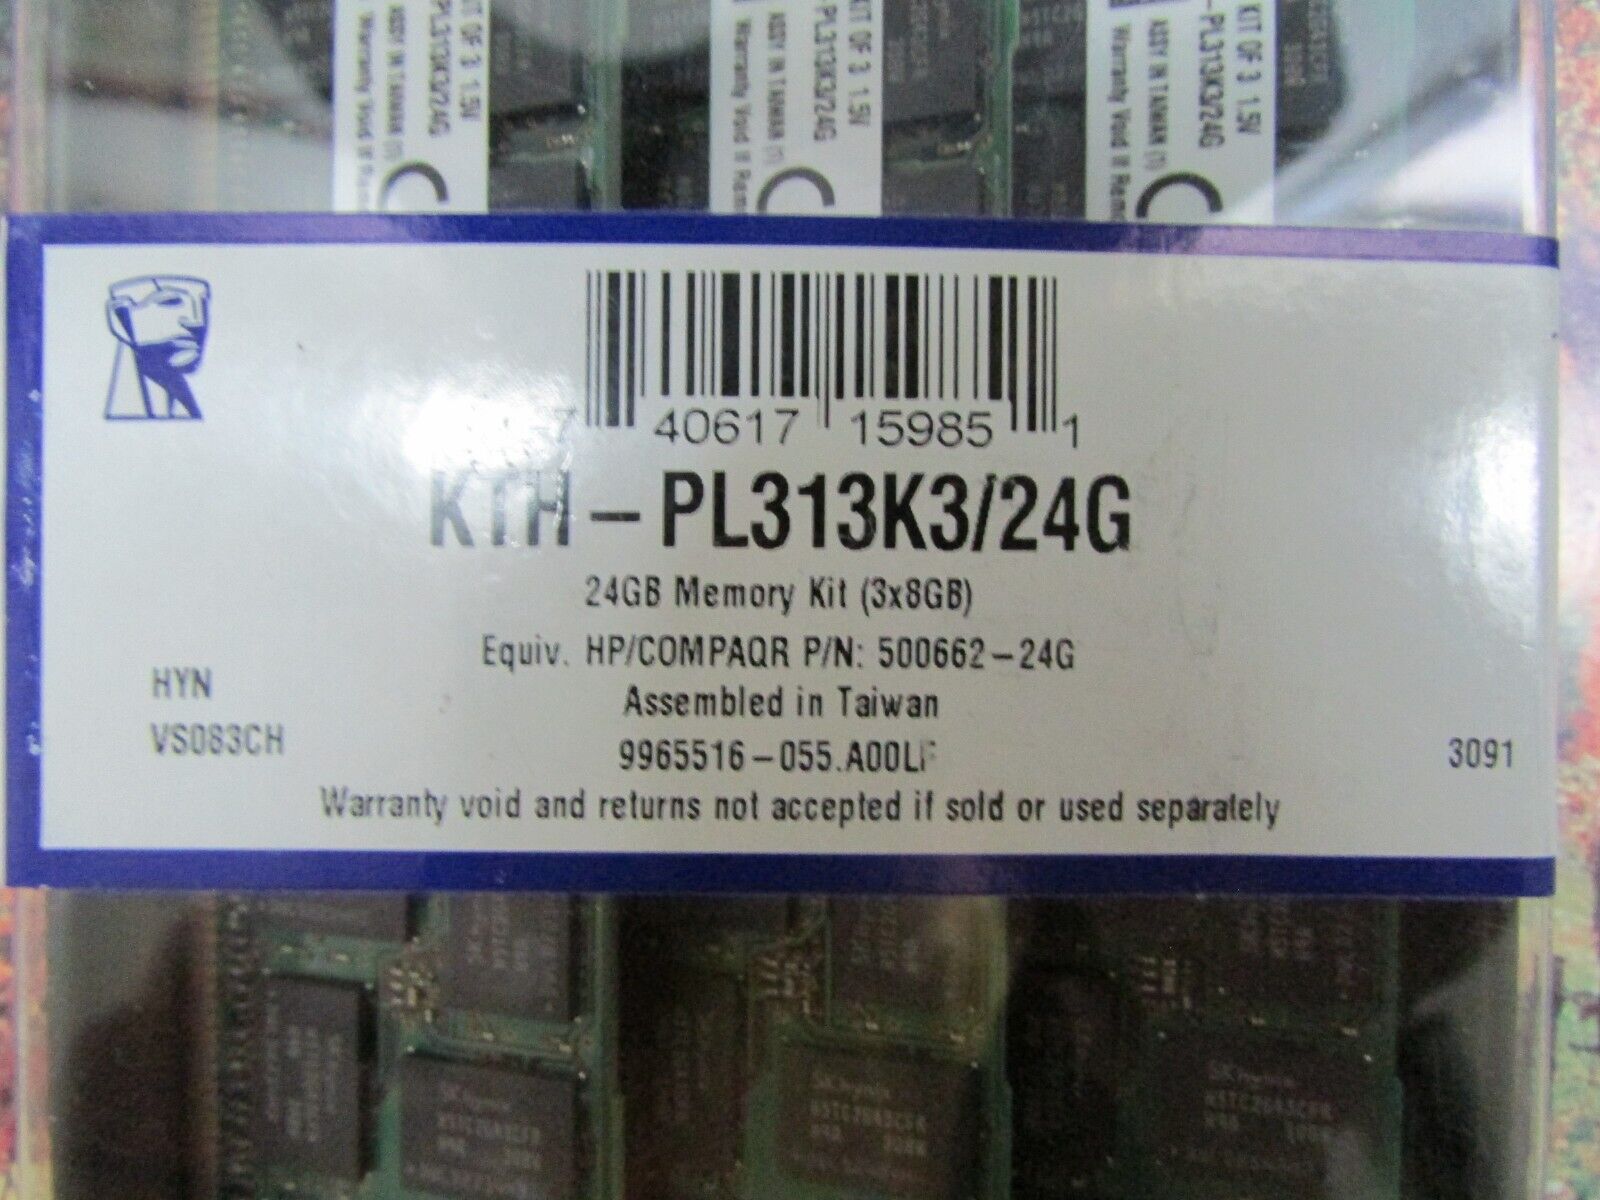 24GB KINGSTON KTH-PL313K3/24G (3X8GB) DDR3 SERVER RAM MEMORY 